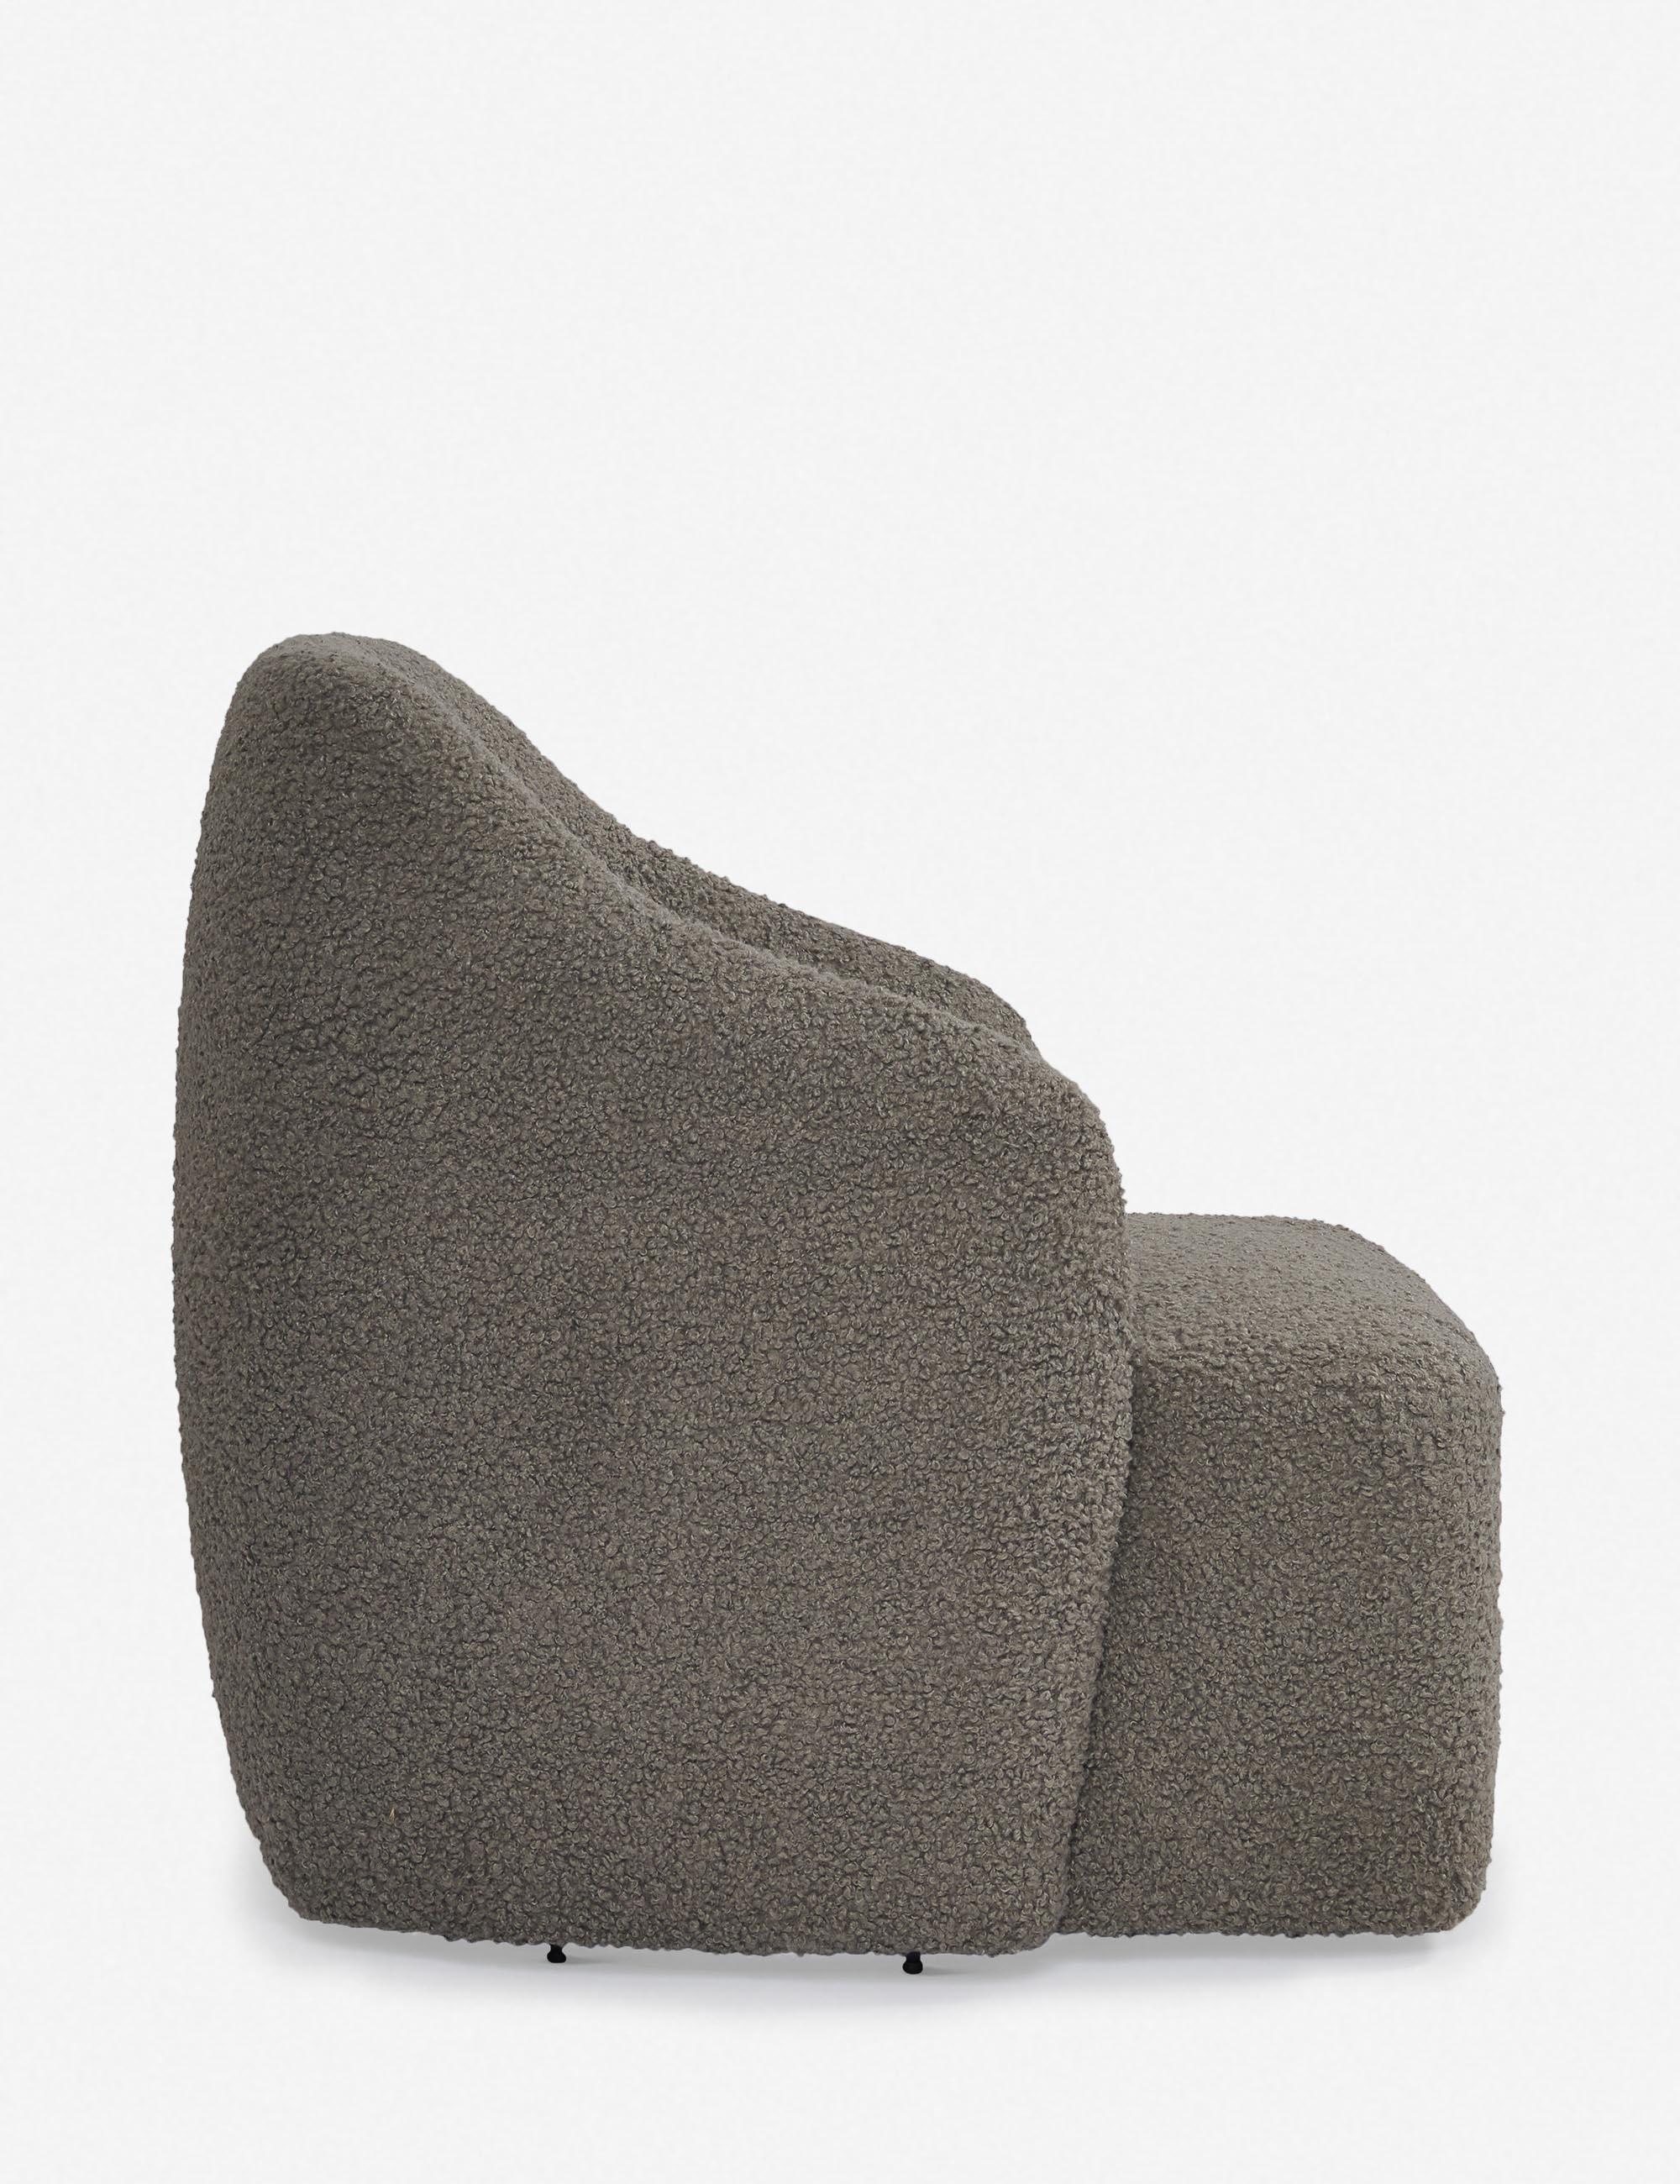 Tobi Swivel Chair, Gray - Image 2